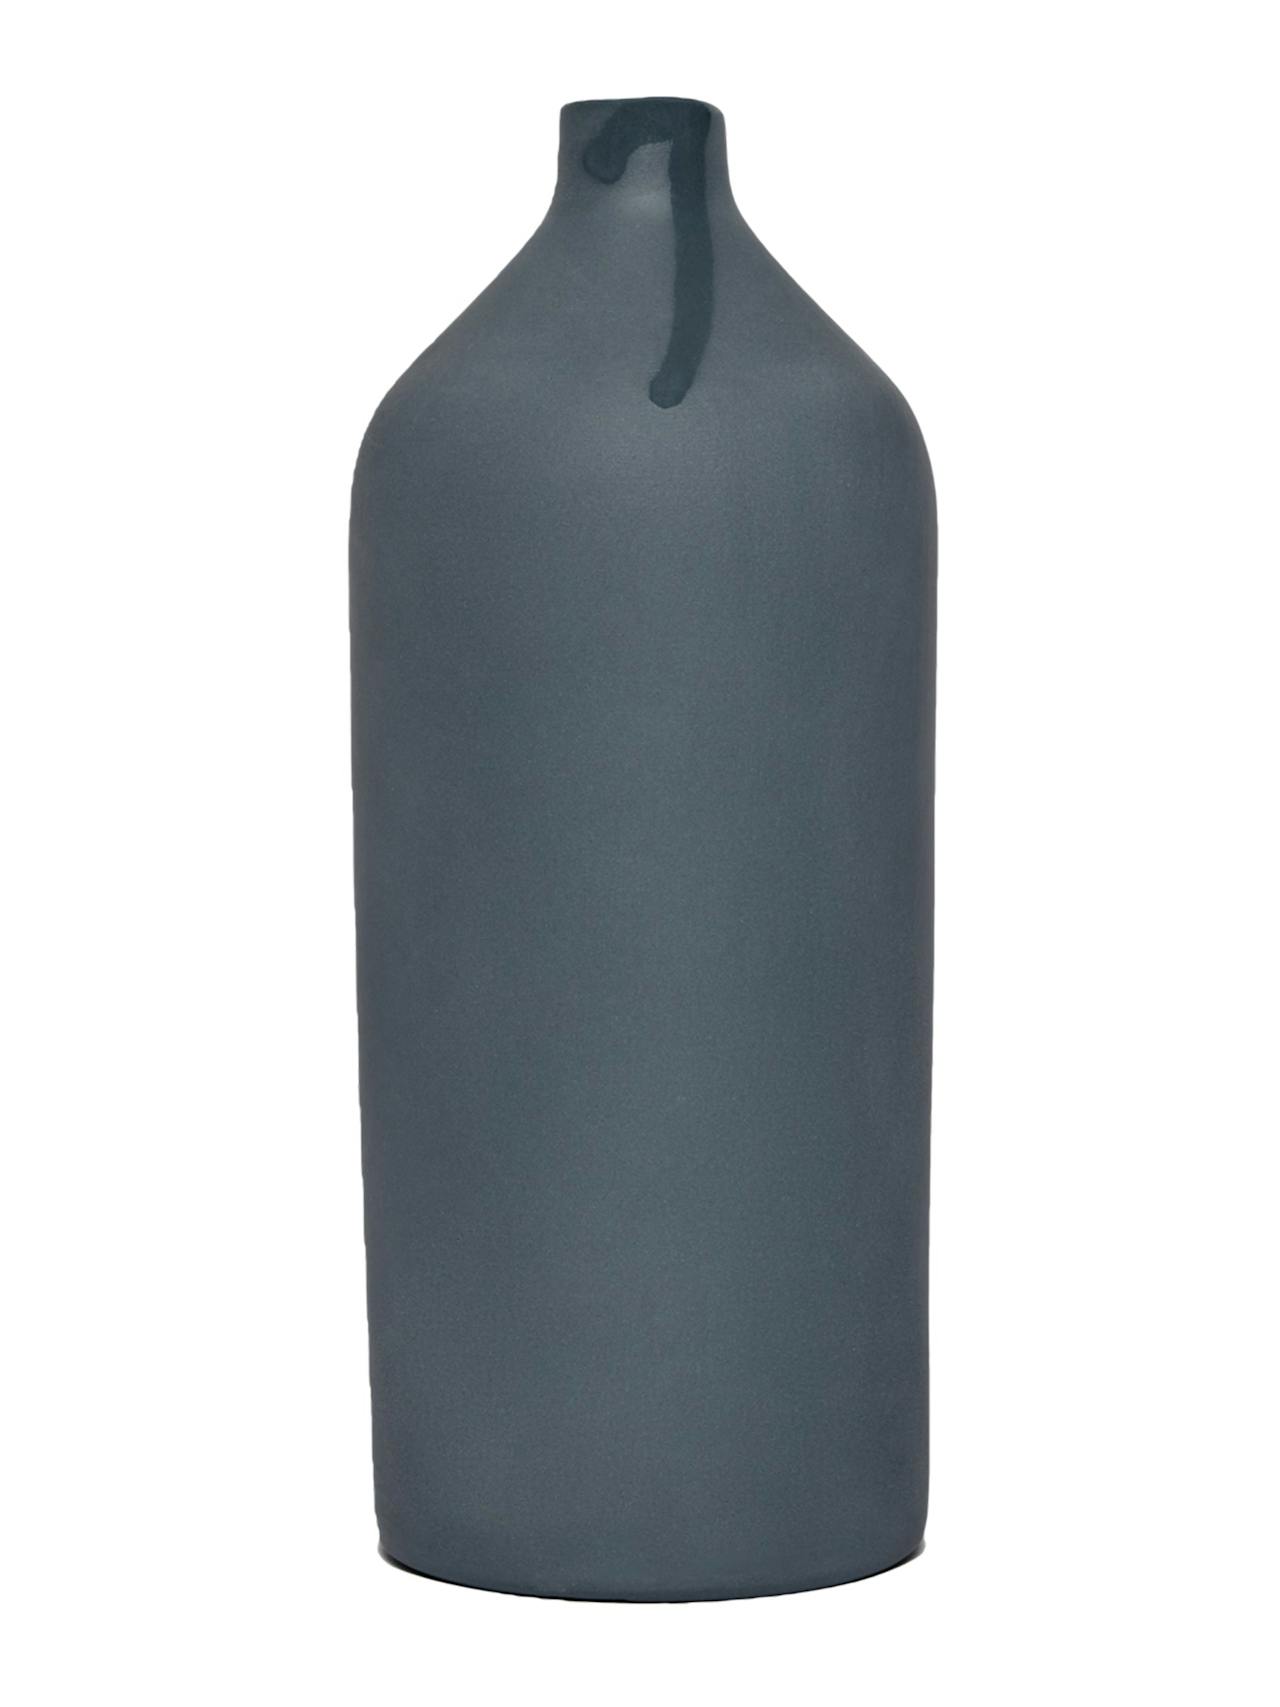 Matte grey vase